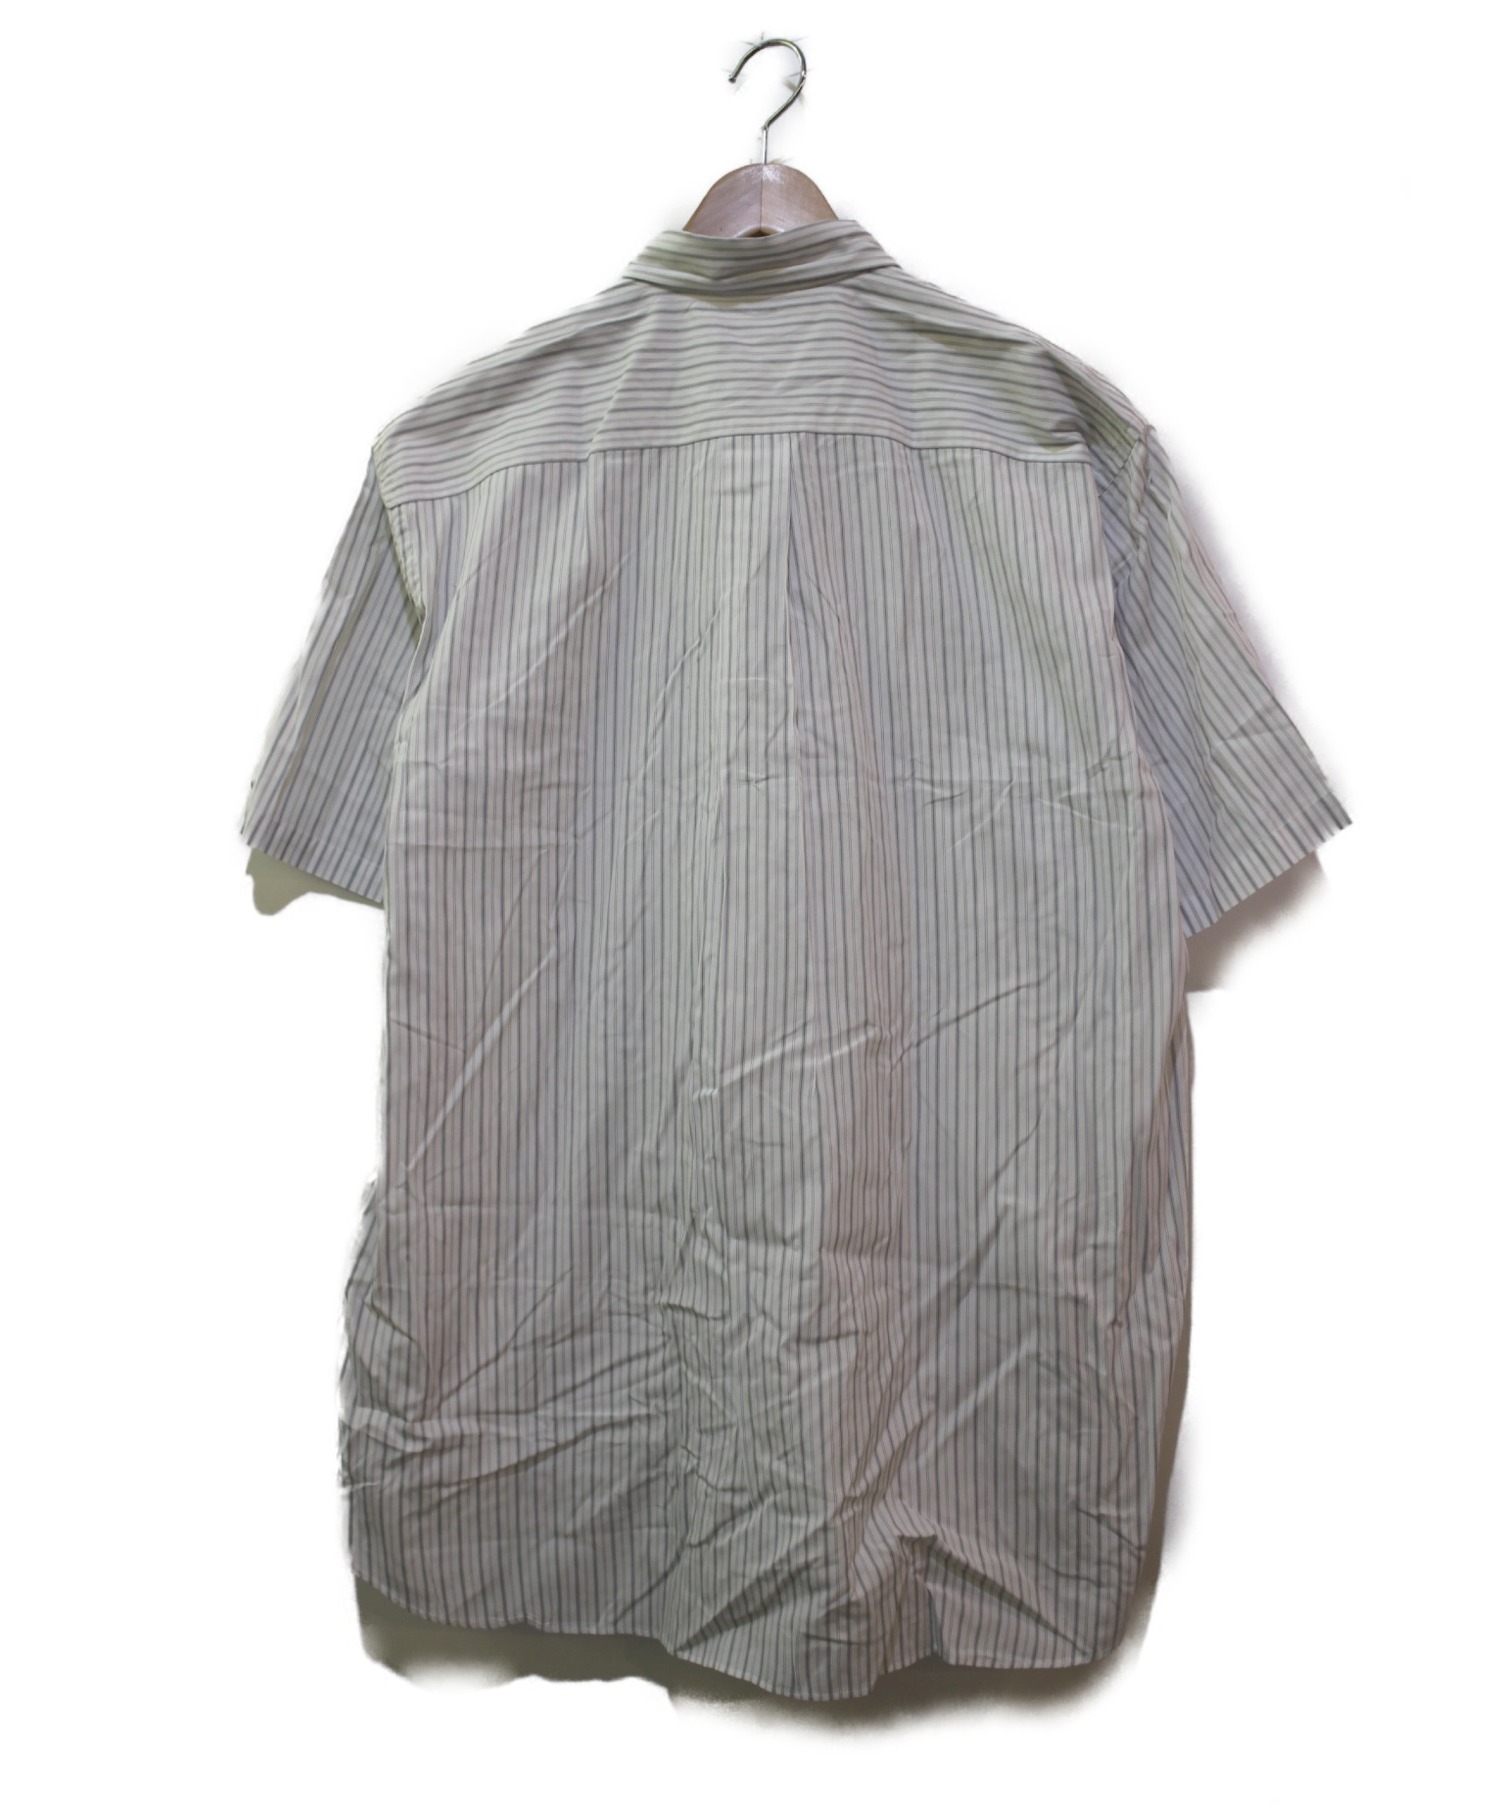 COMME des GARCONS HOMME (コムデギャルソン オム) ストライプ半袖シャツ グレー サイズ:表記なし 90年代　HB-020450